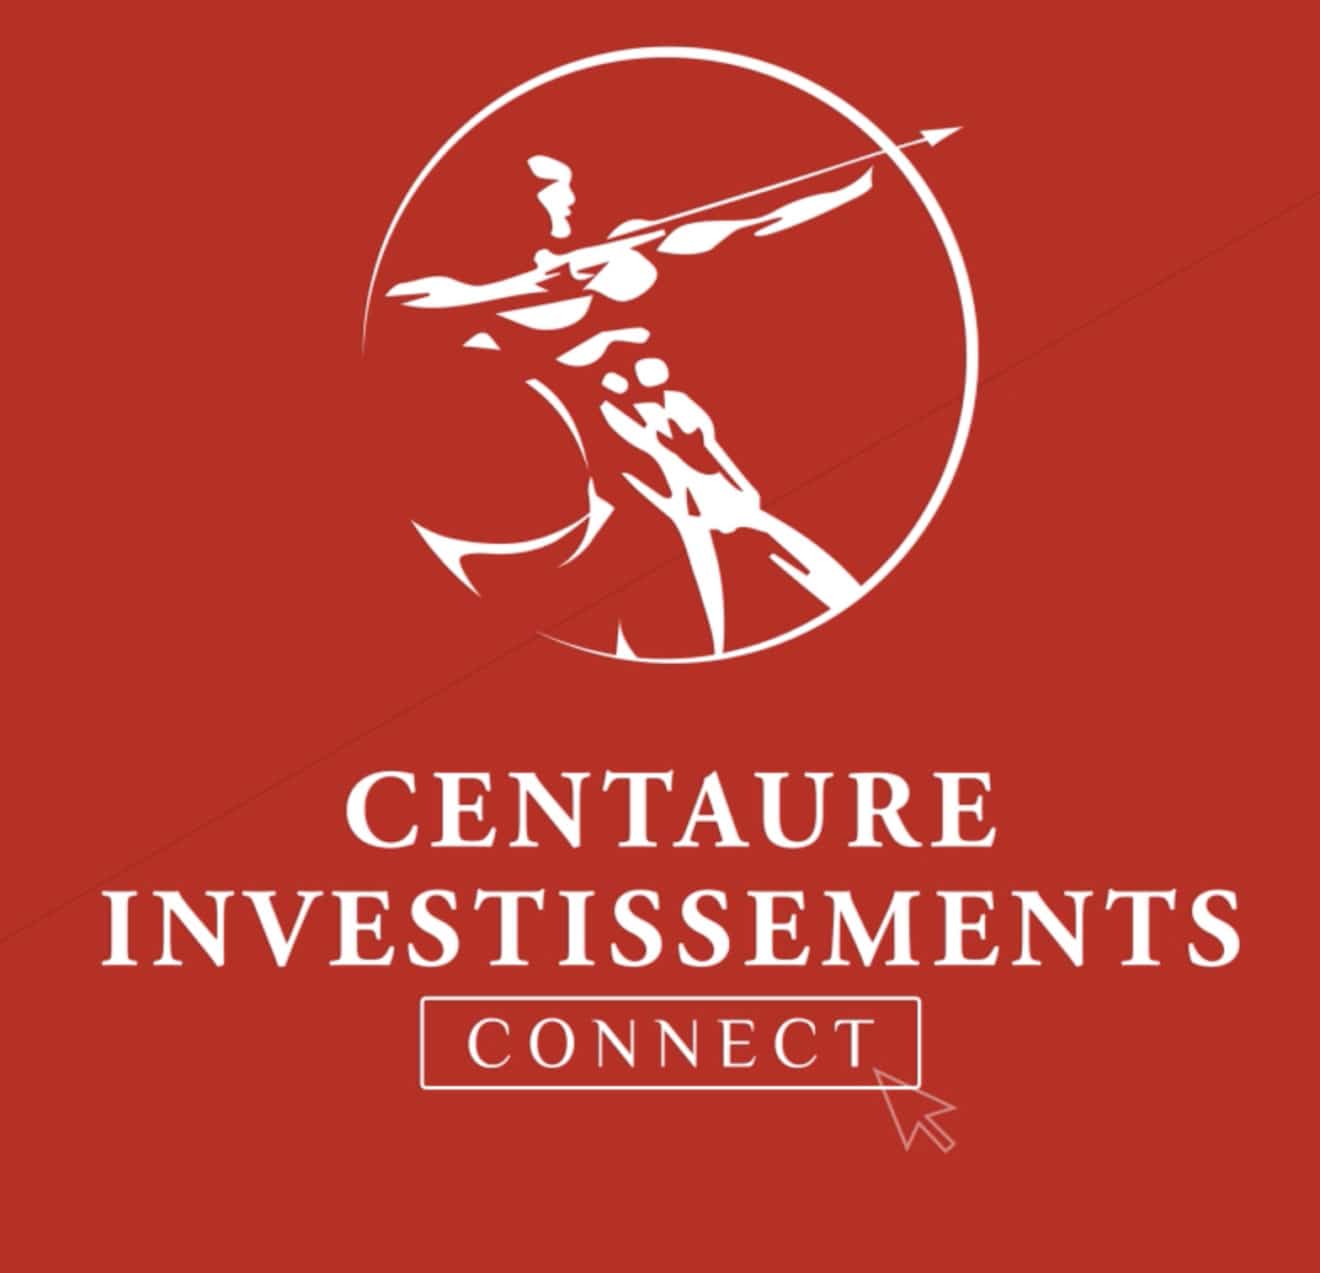 Centaure Investissements Connect